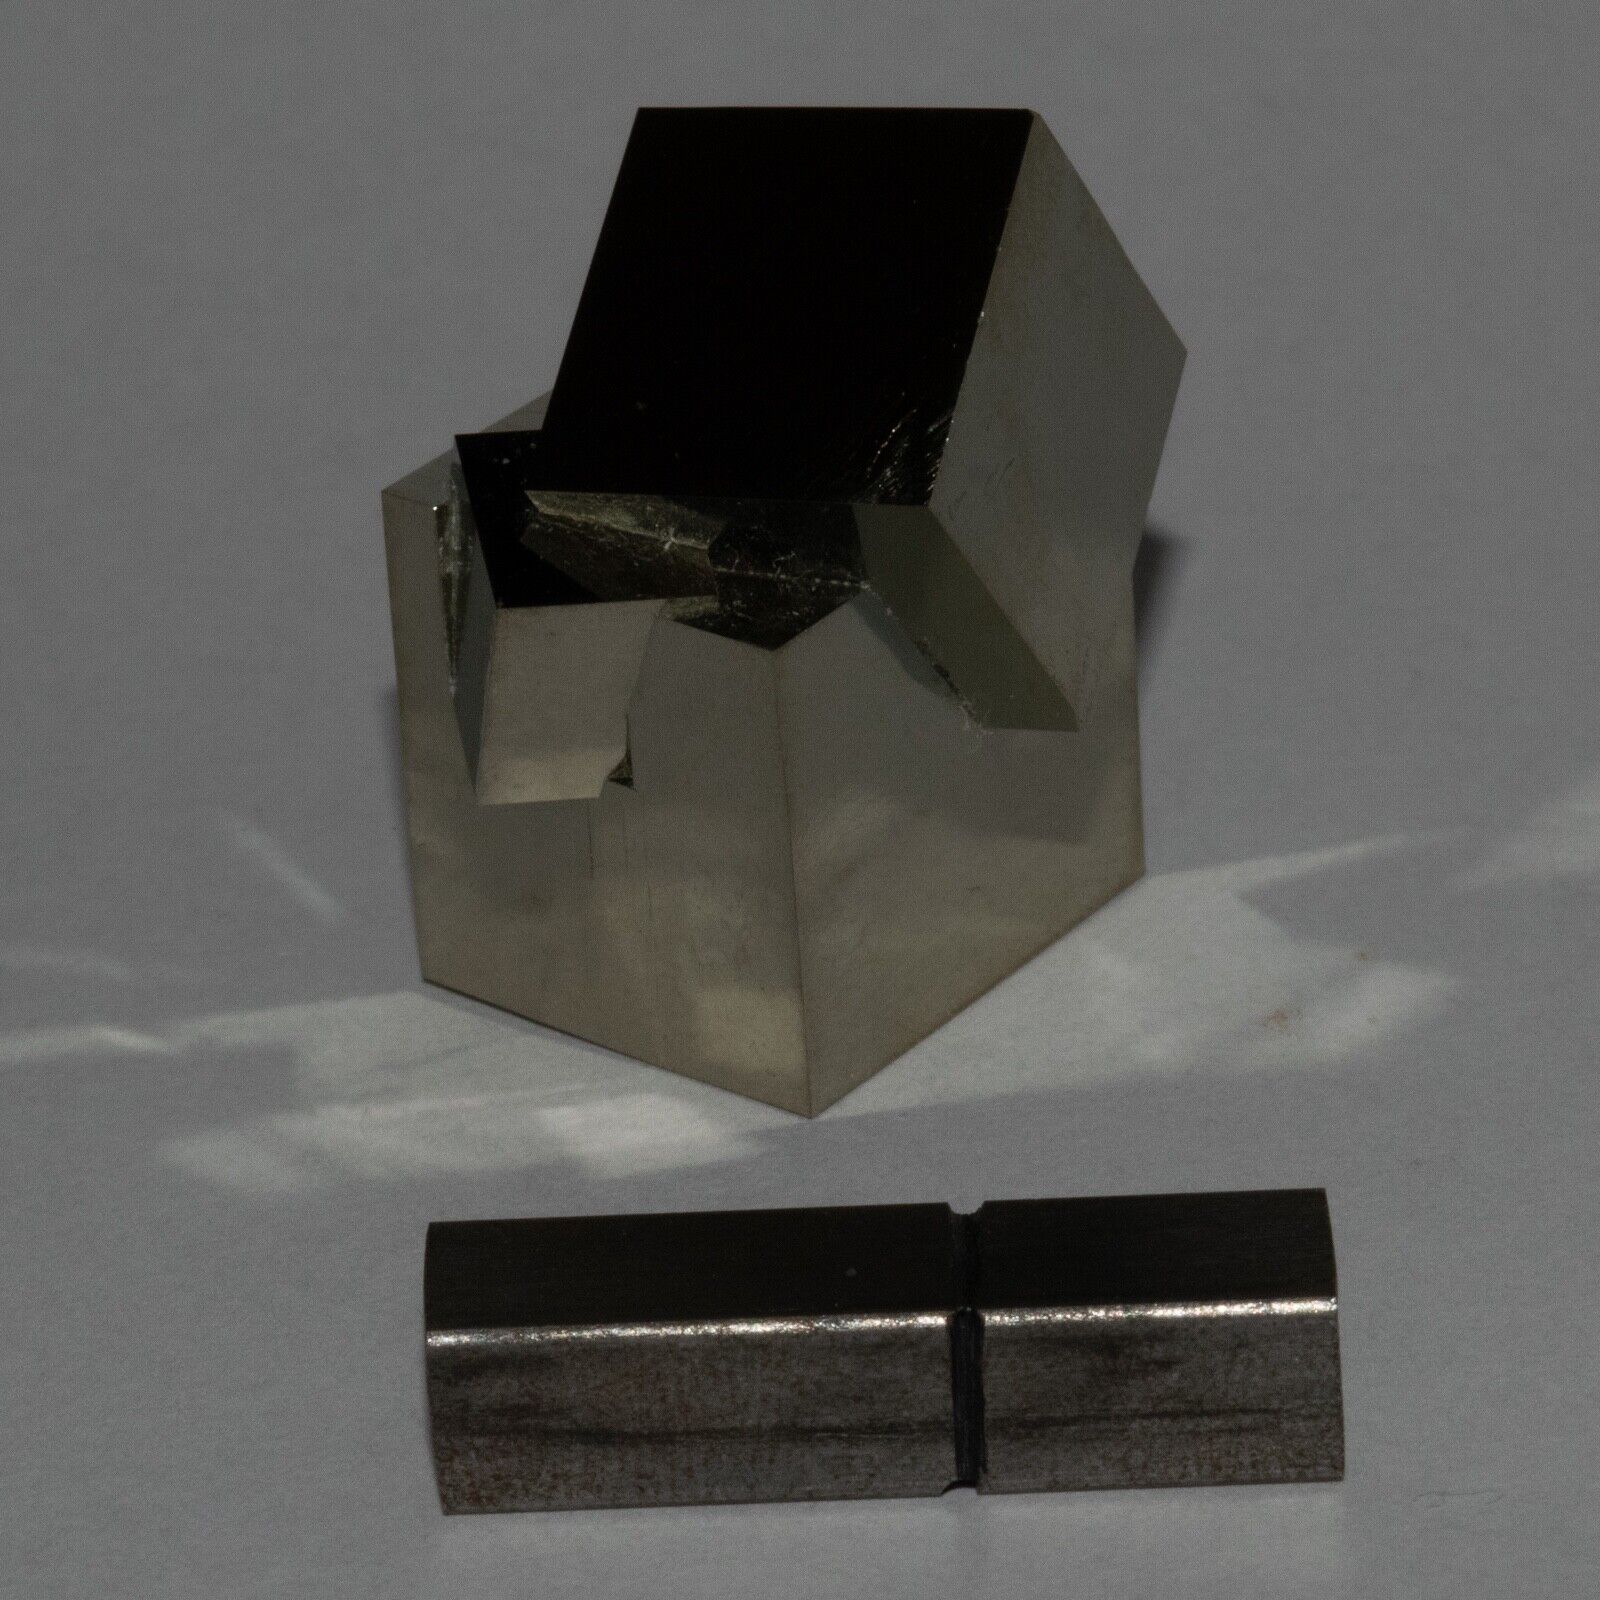 TRIPLE Pyrite Interconnected-Cubes from Navajun Spain. 29mm. Thumbnail. Py-22